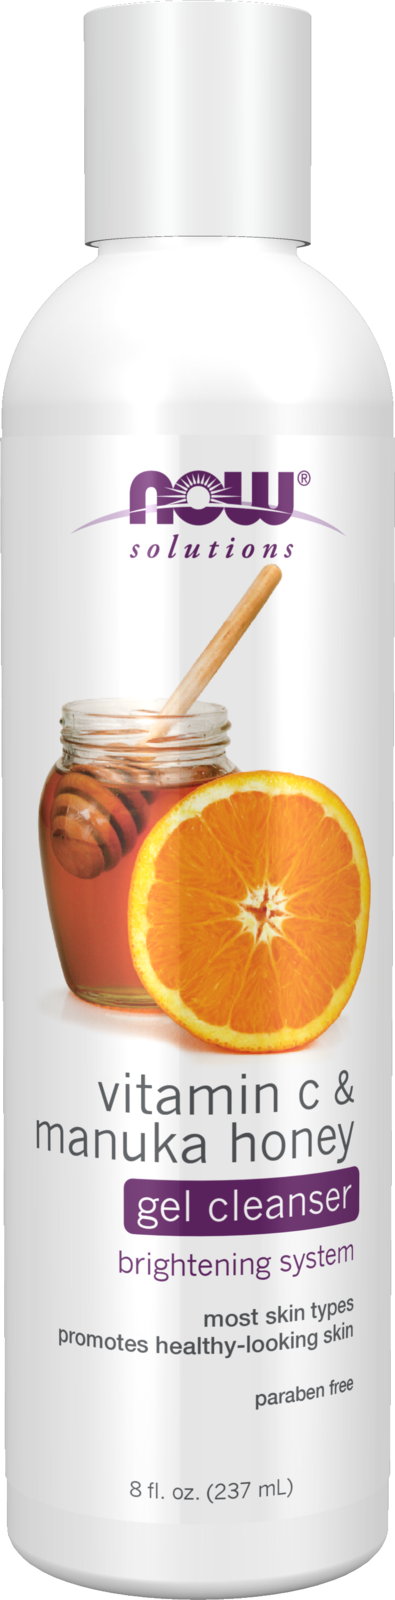 Vitamin C & Manuka Honey Gel Cleanser - 8 fl. oz. Bottle Front